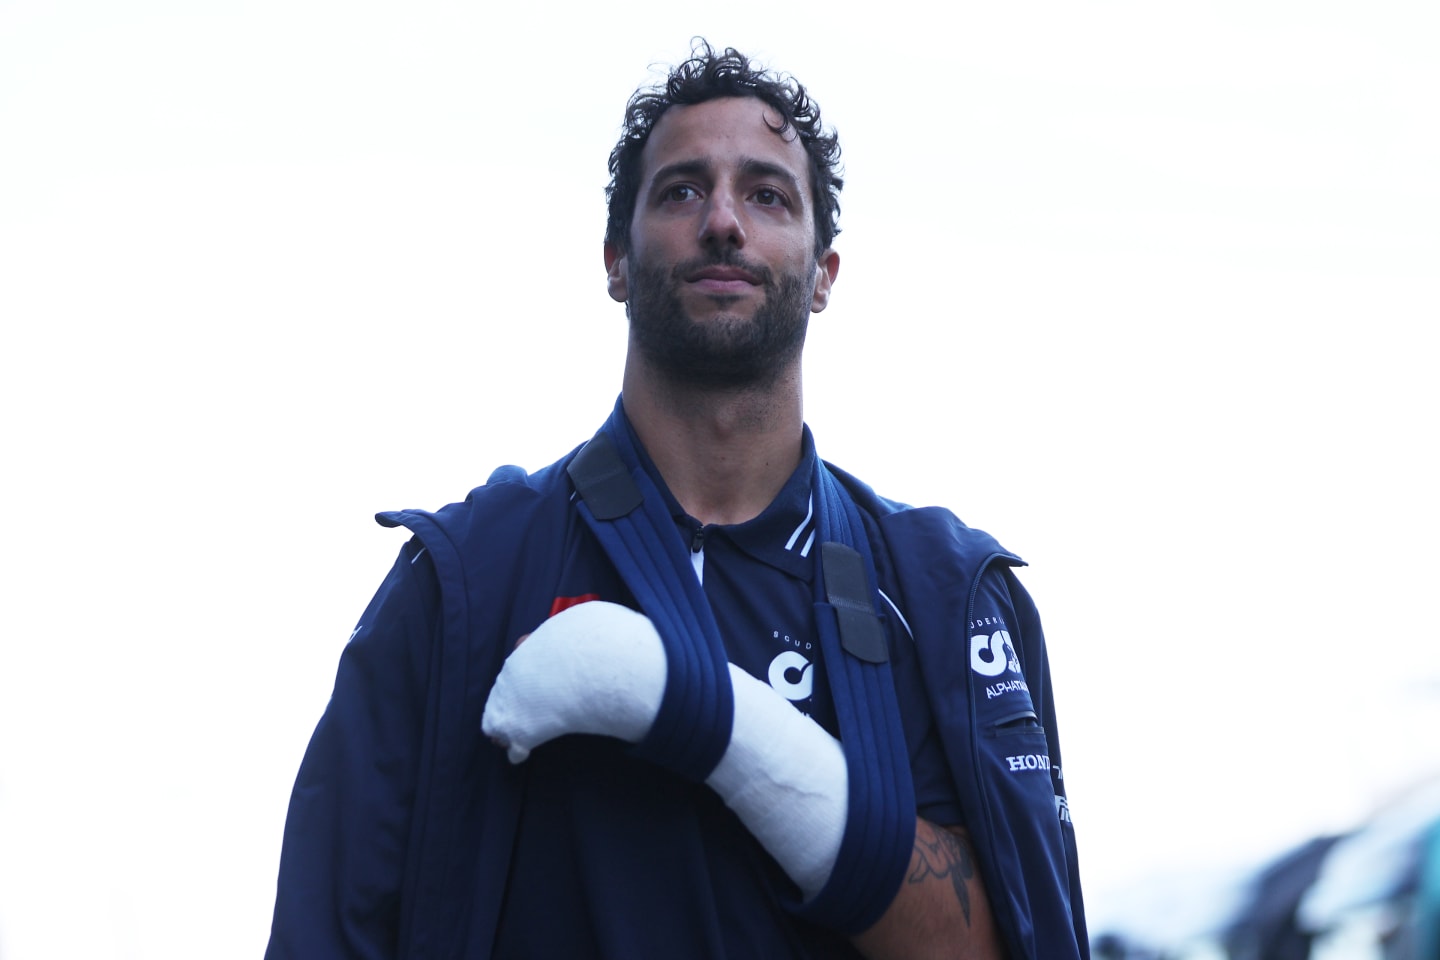 ZANDVOORT, NETHERLANDS - AUGUST 25: Daniel Ricciardo of Australia and Scuderia AlphaTauri wears a